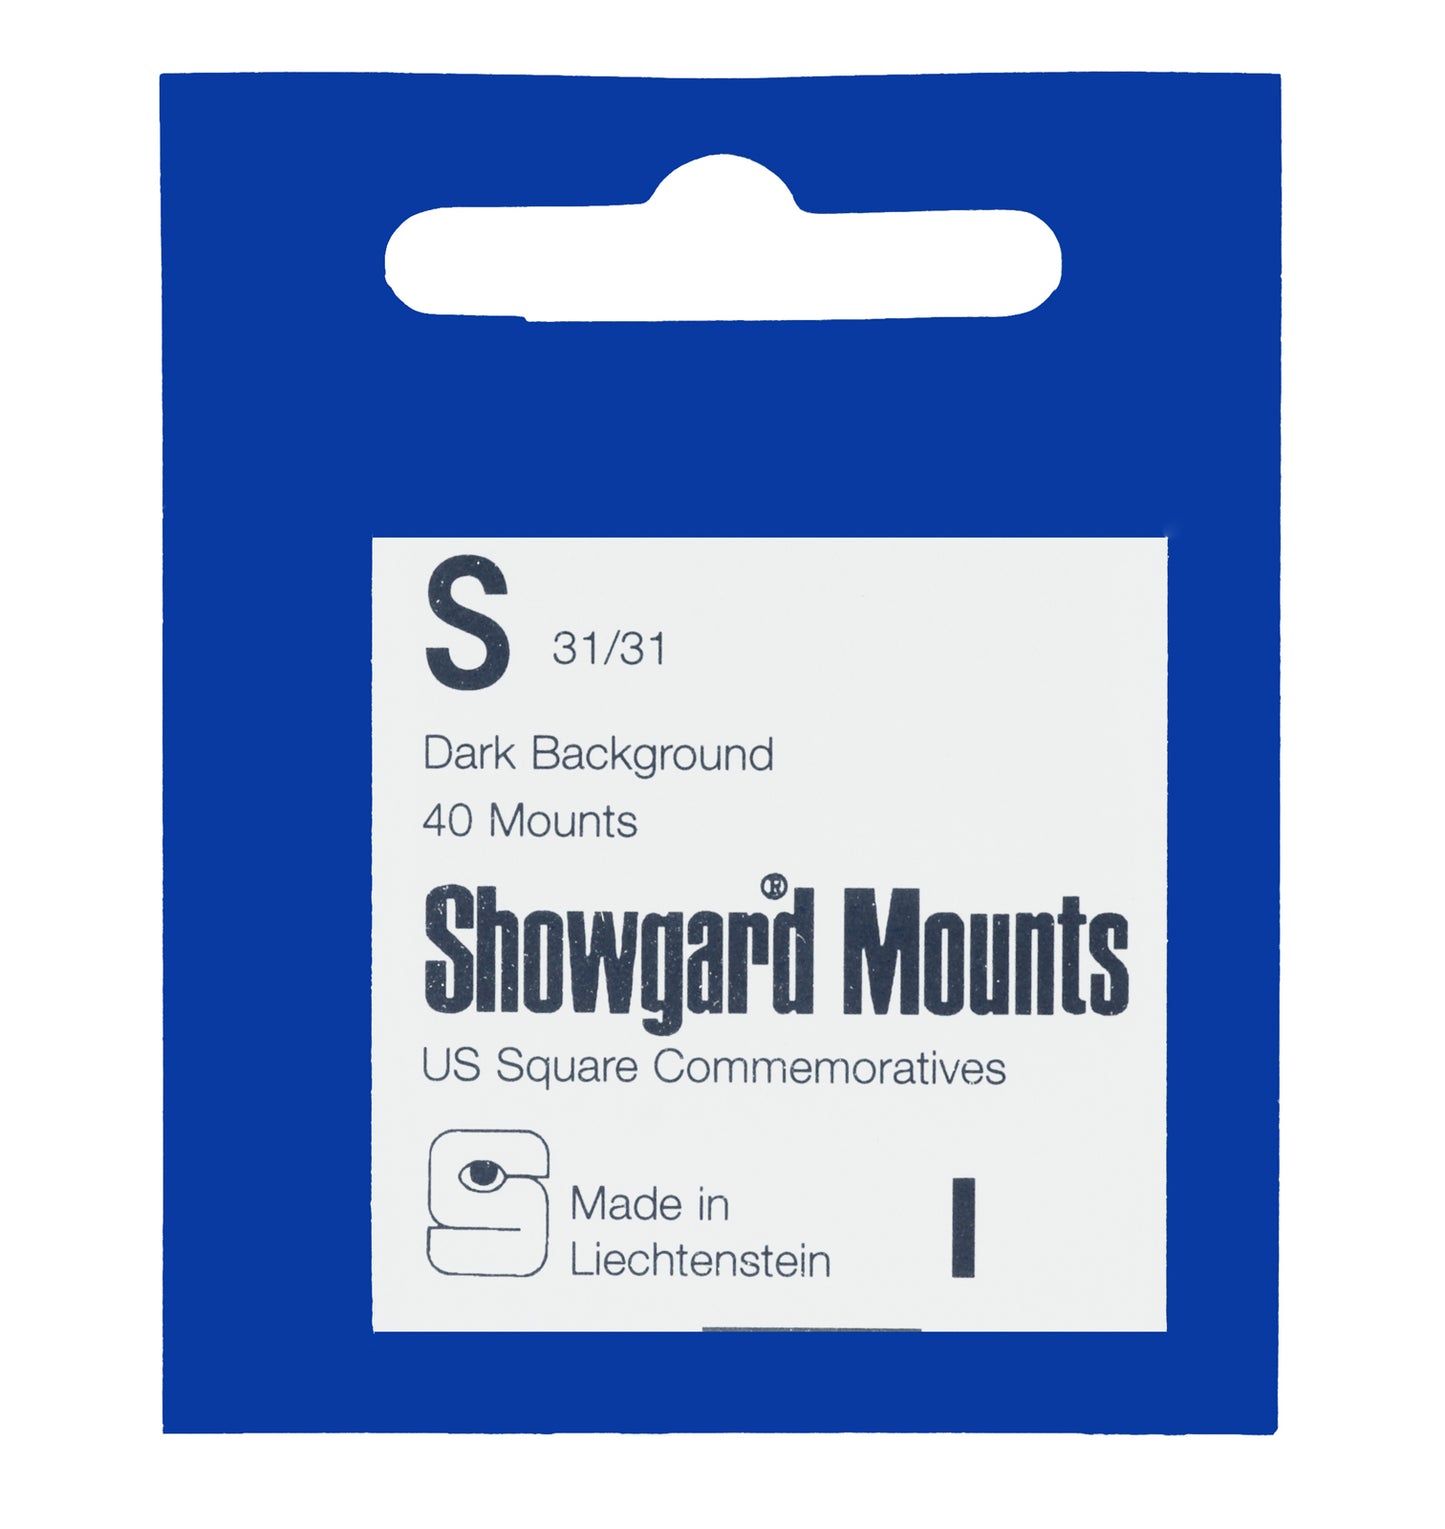 Showgard Mounts S